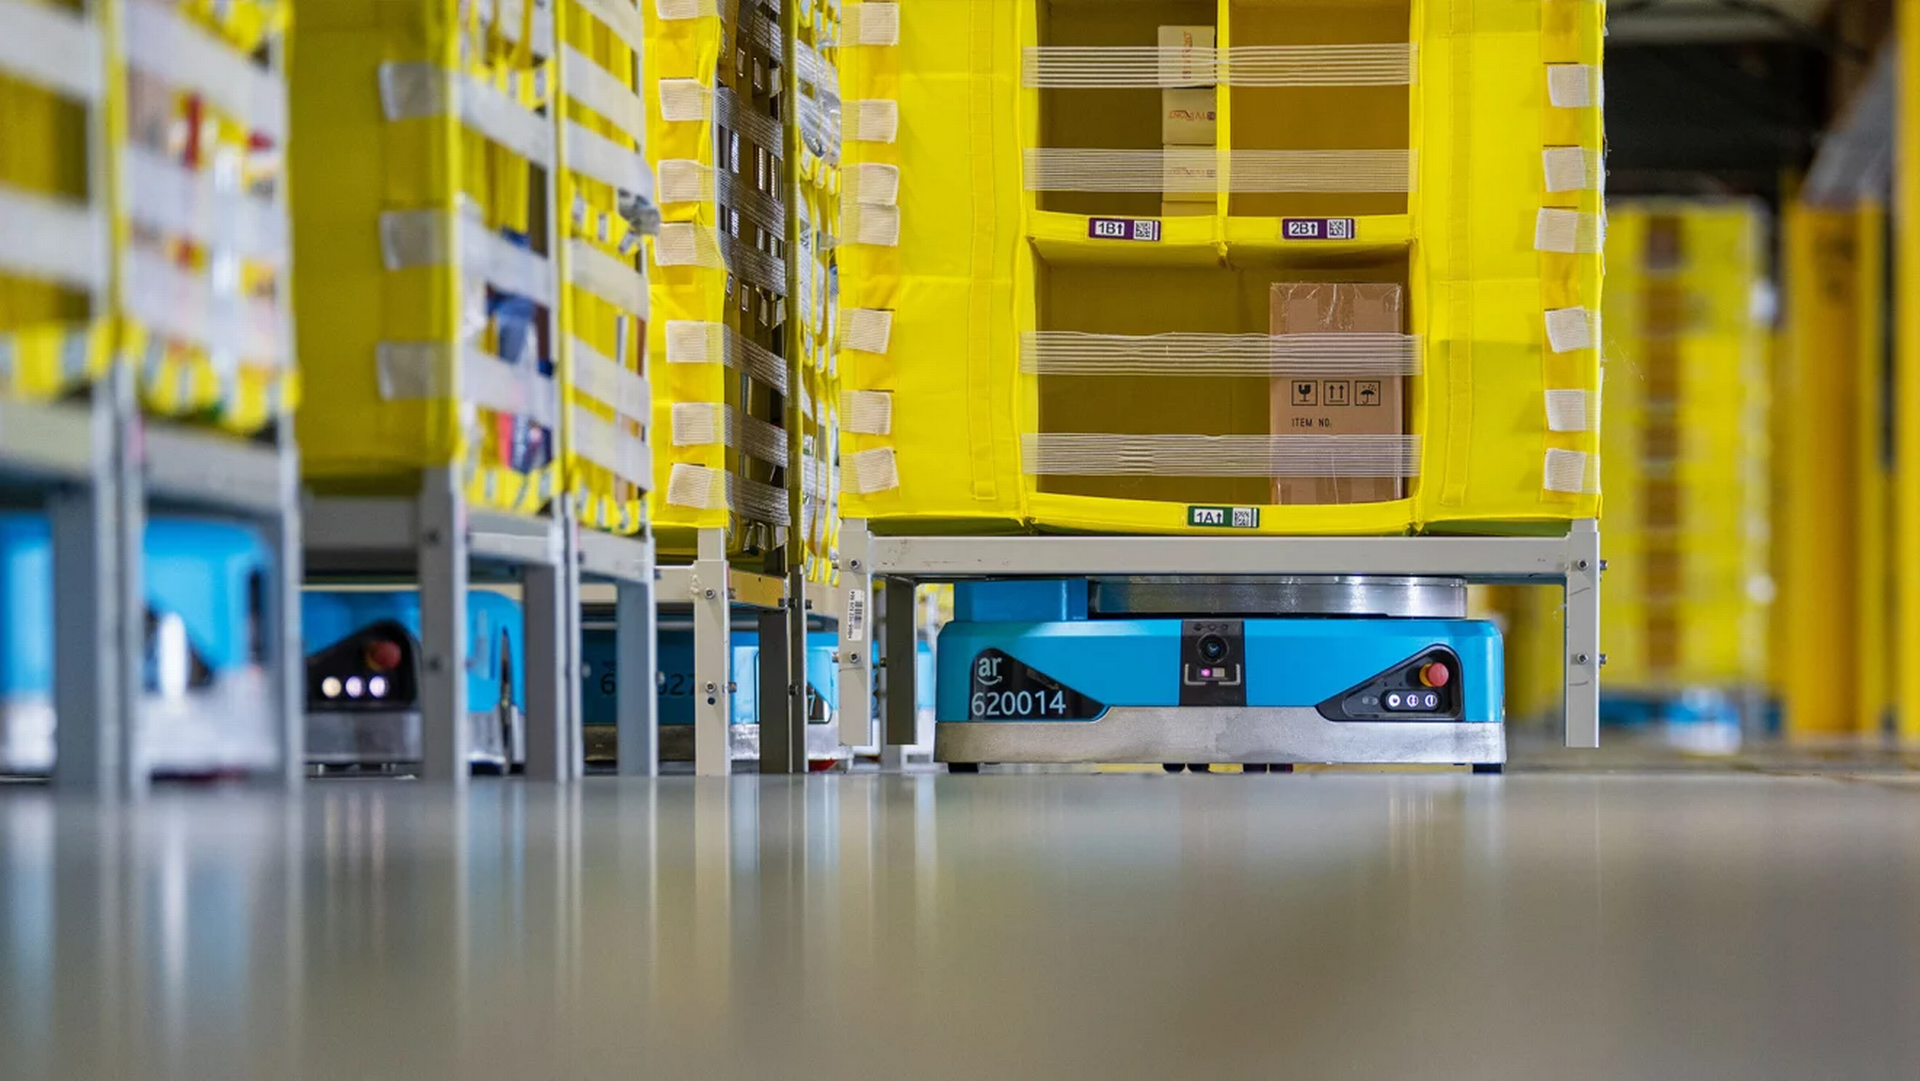 Amazon presents the first fully autonomous warehouse robot